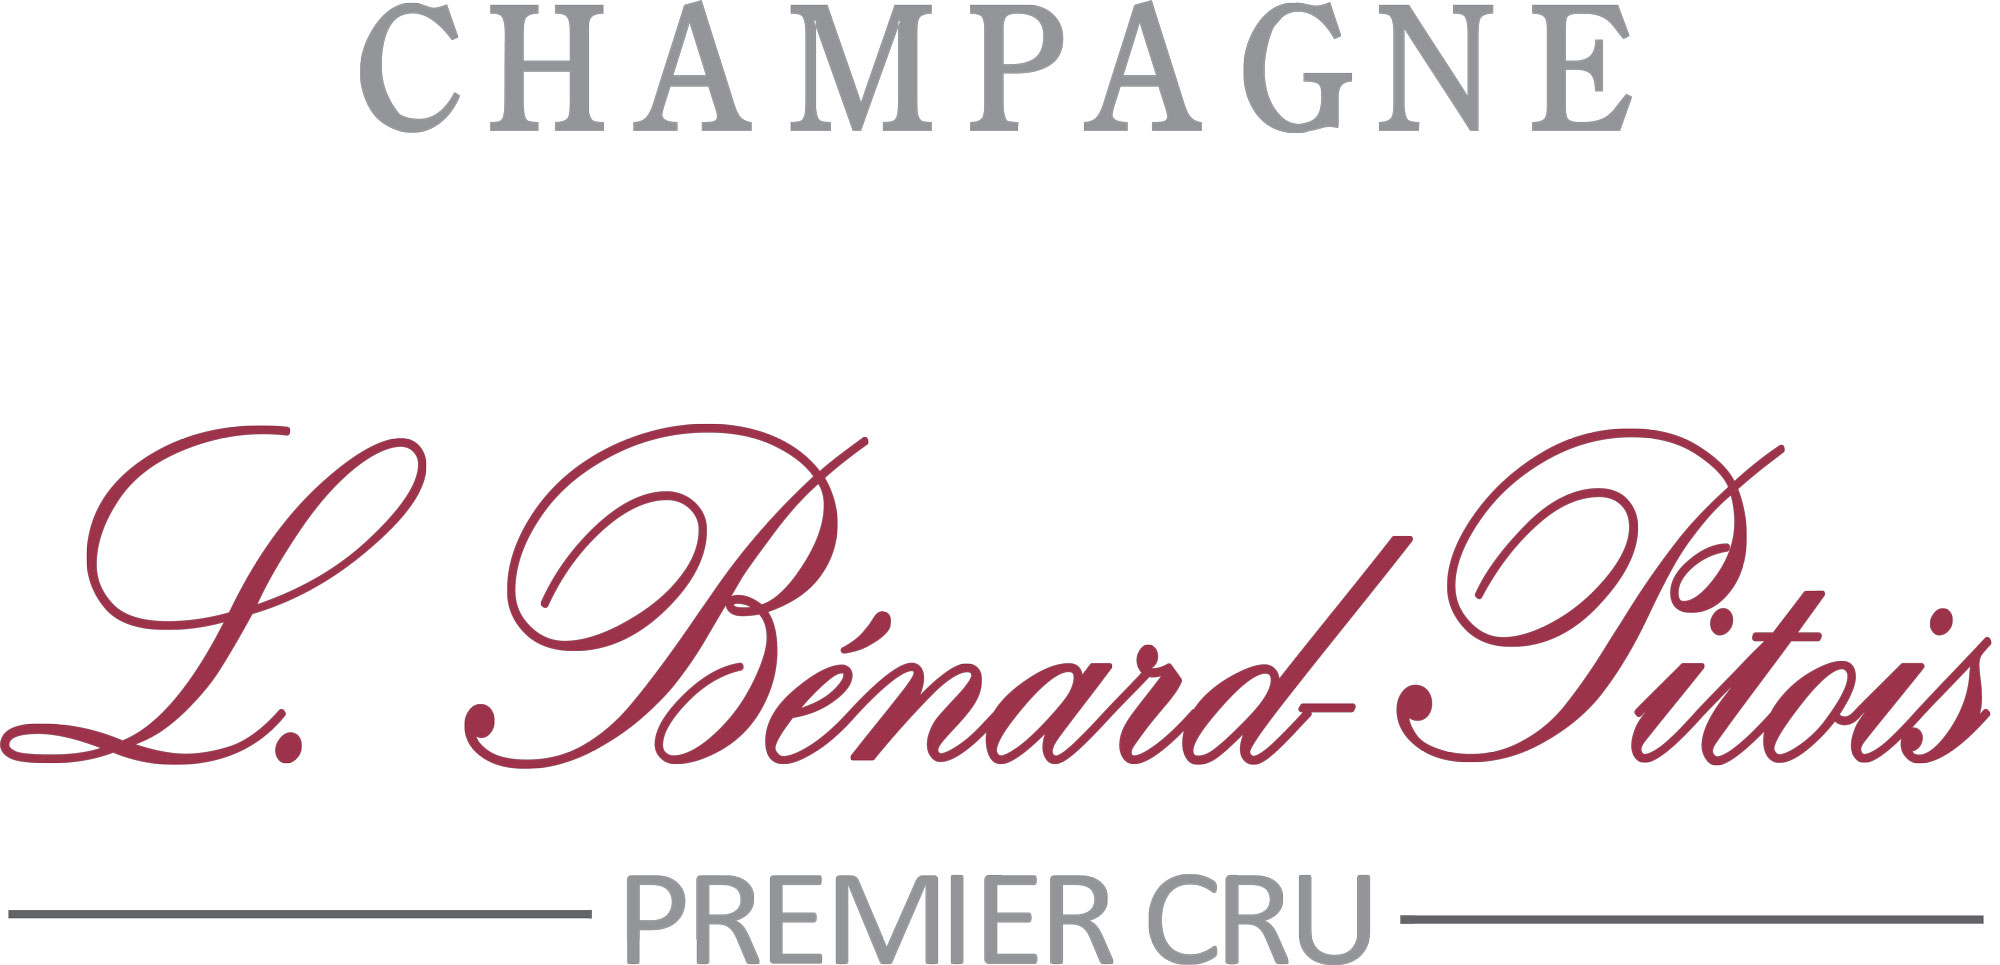 Champagne L. Bénard-Pitois